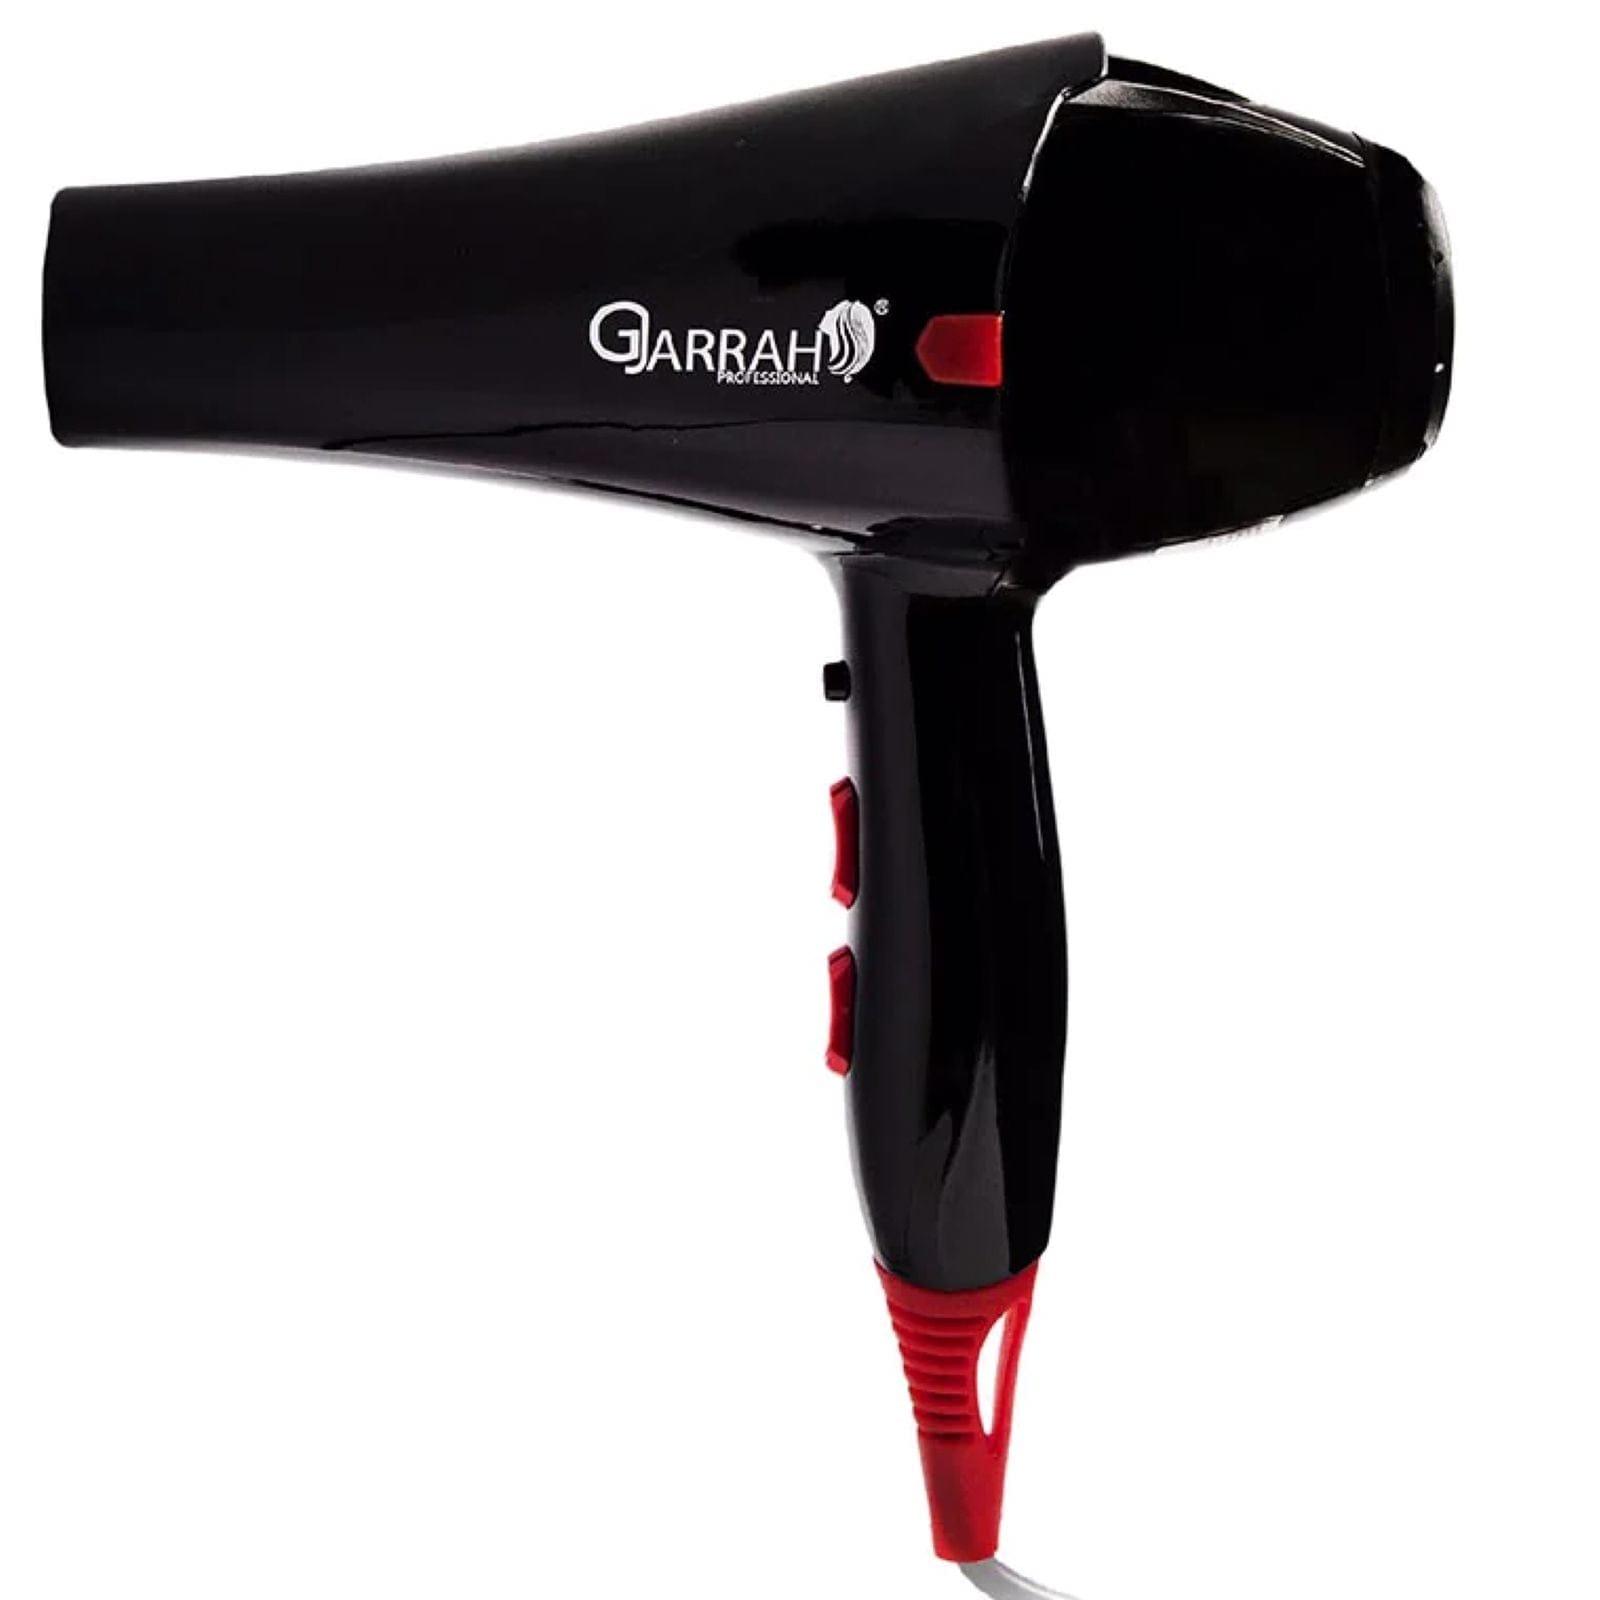 Gjarrah Professional Hair Dryer HD-1007